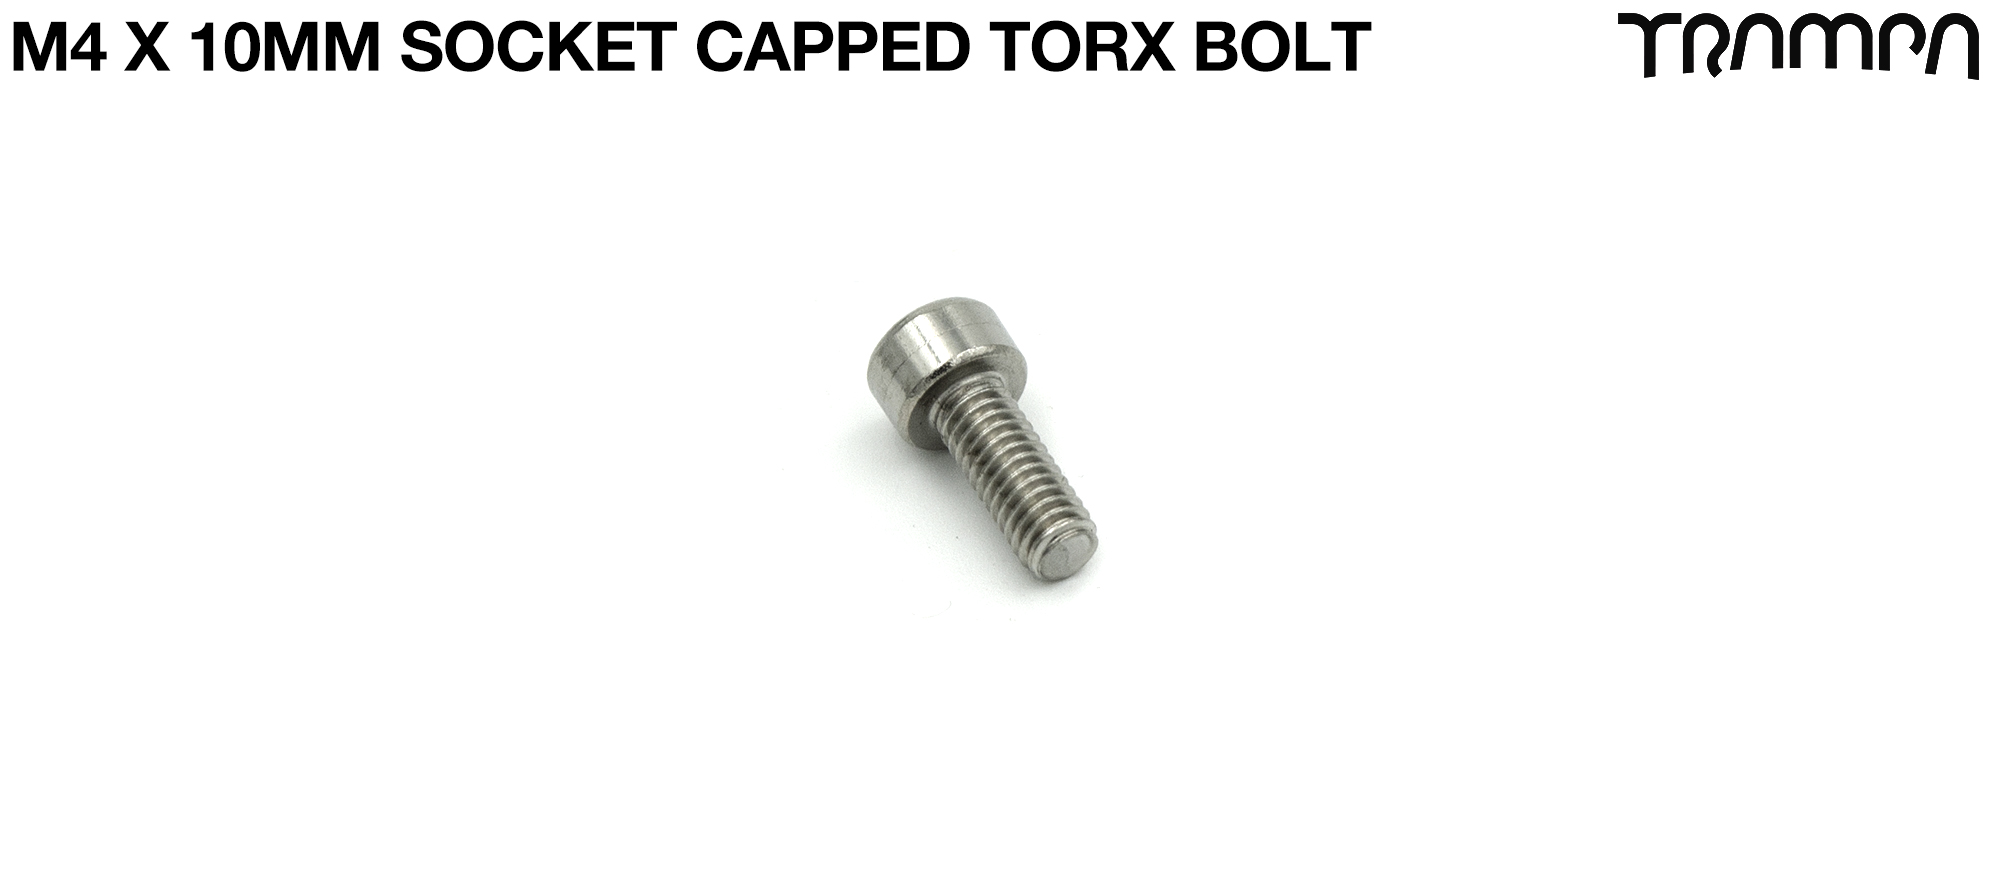 M4 x 10mm Socket Capped Torx Bolt - SRT-500